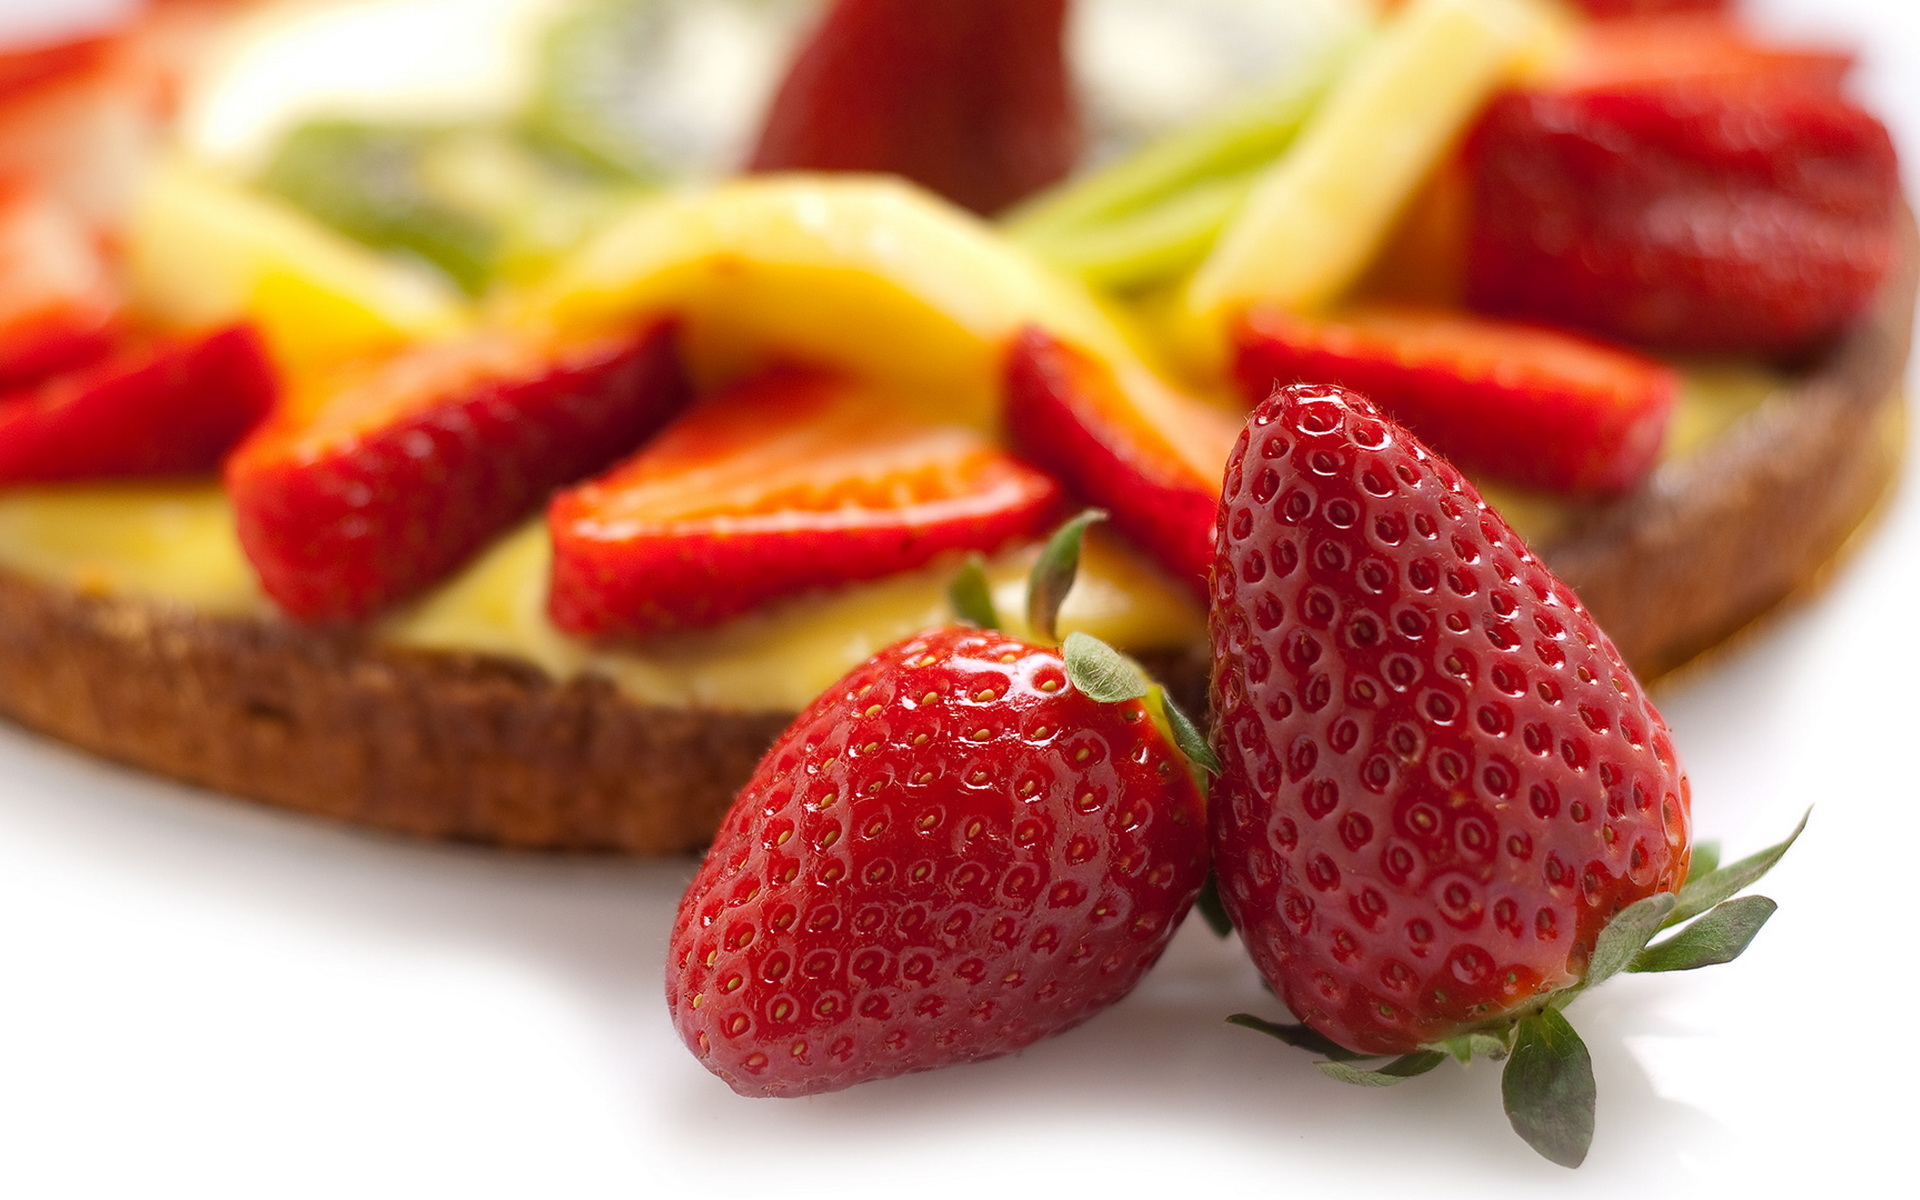 food wallpaper hd,food,strawberry,strawberries,natural foods,dish